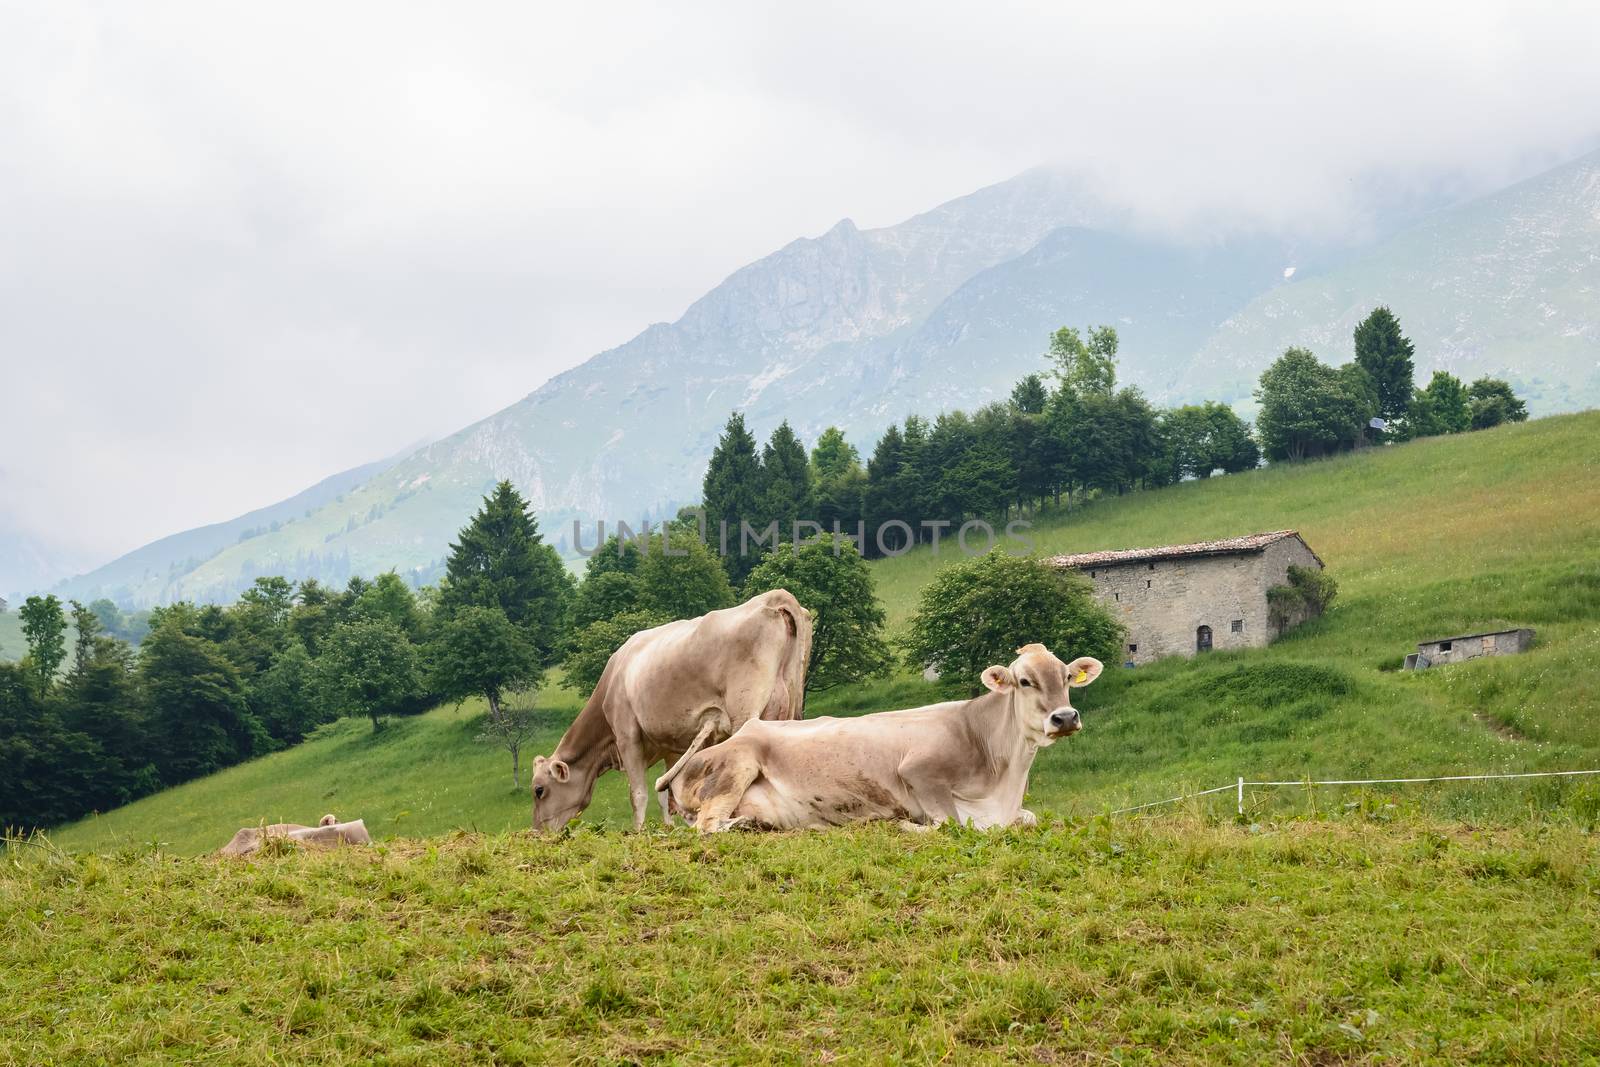 Cows grazing in the mountain  by Robertobinetti70